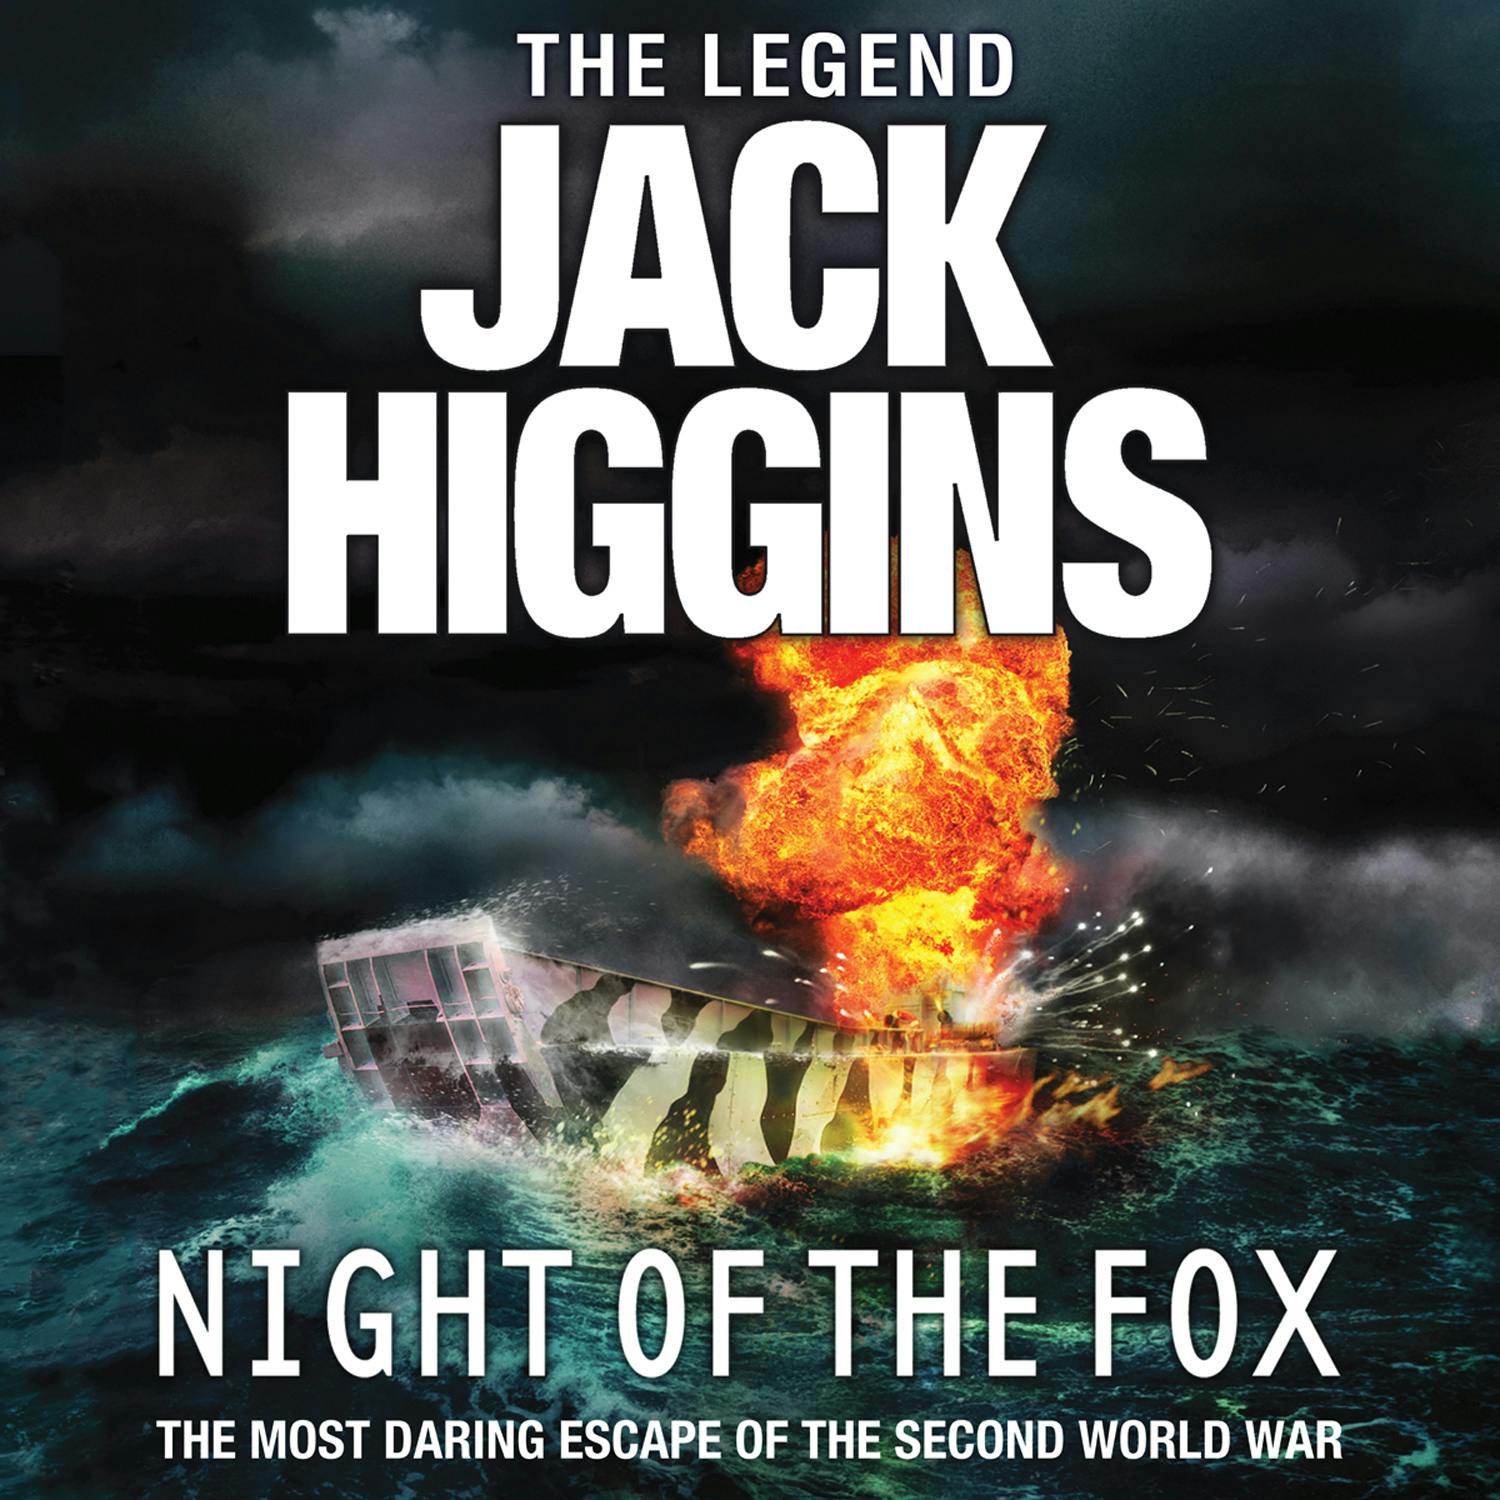 Night of the Fox - Jack Higgins